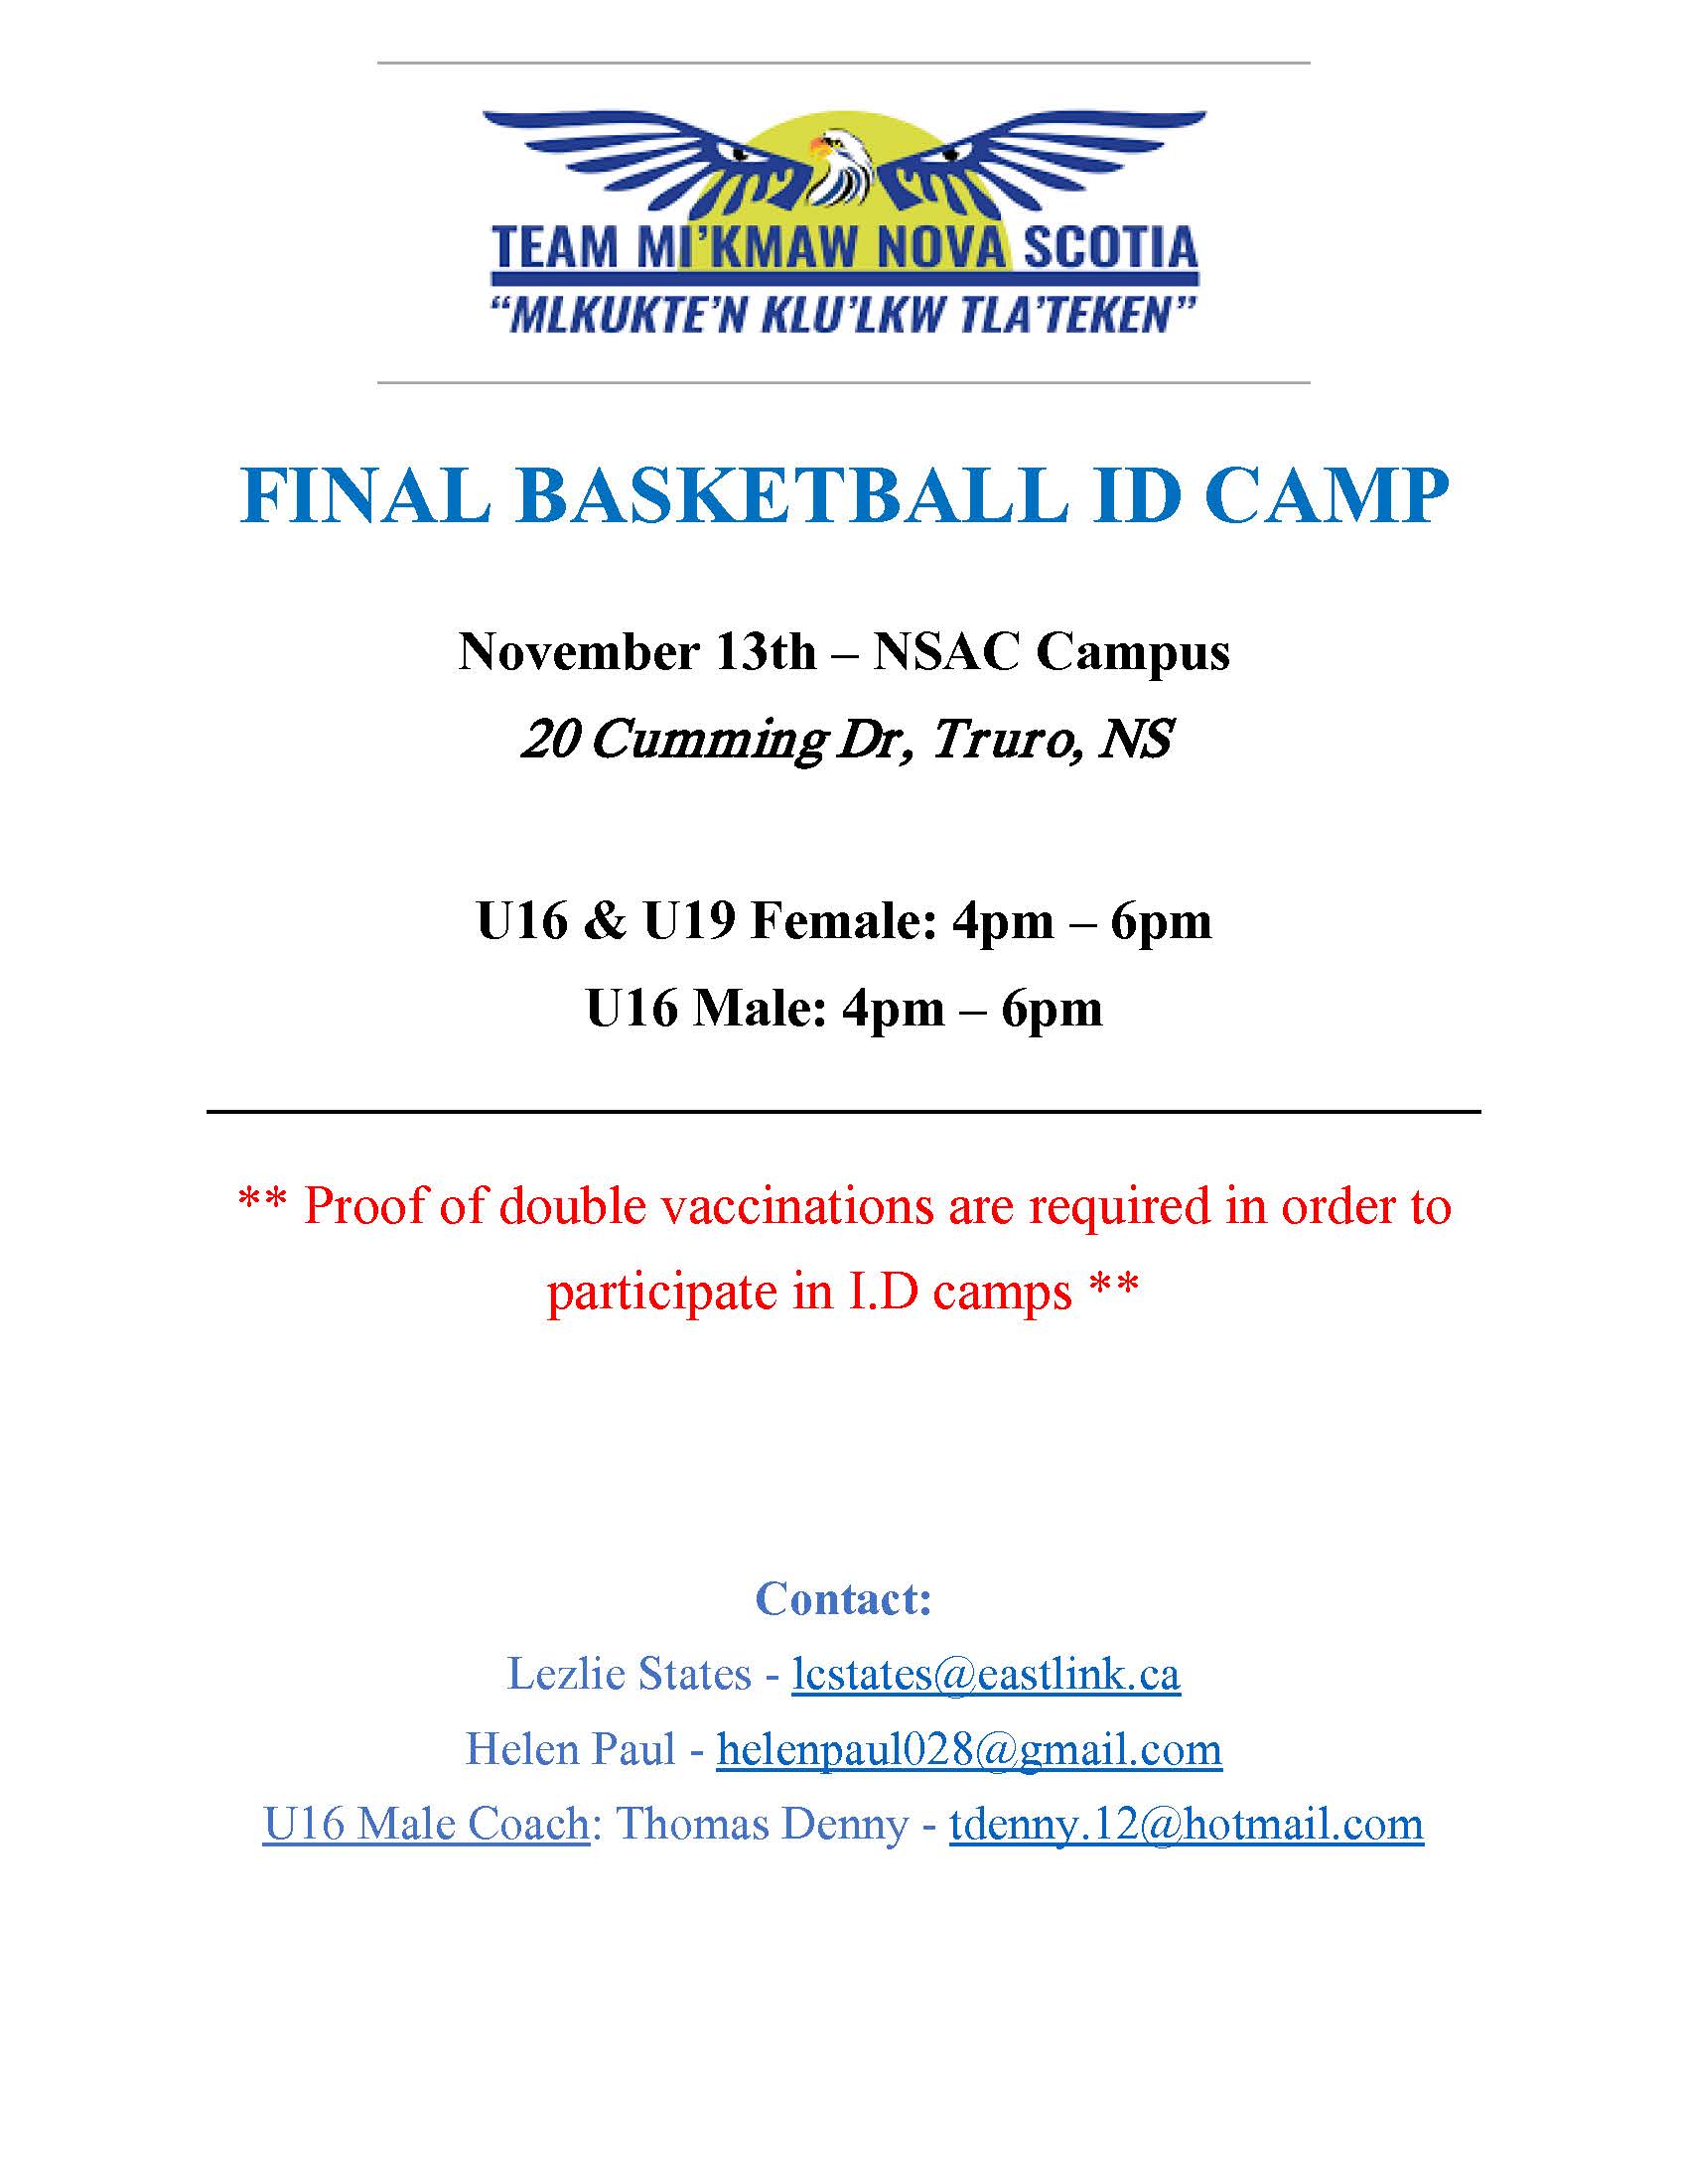 Final Basketball ID Camps - Nov